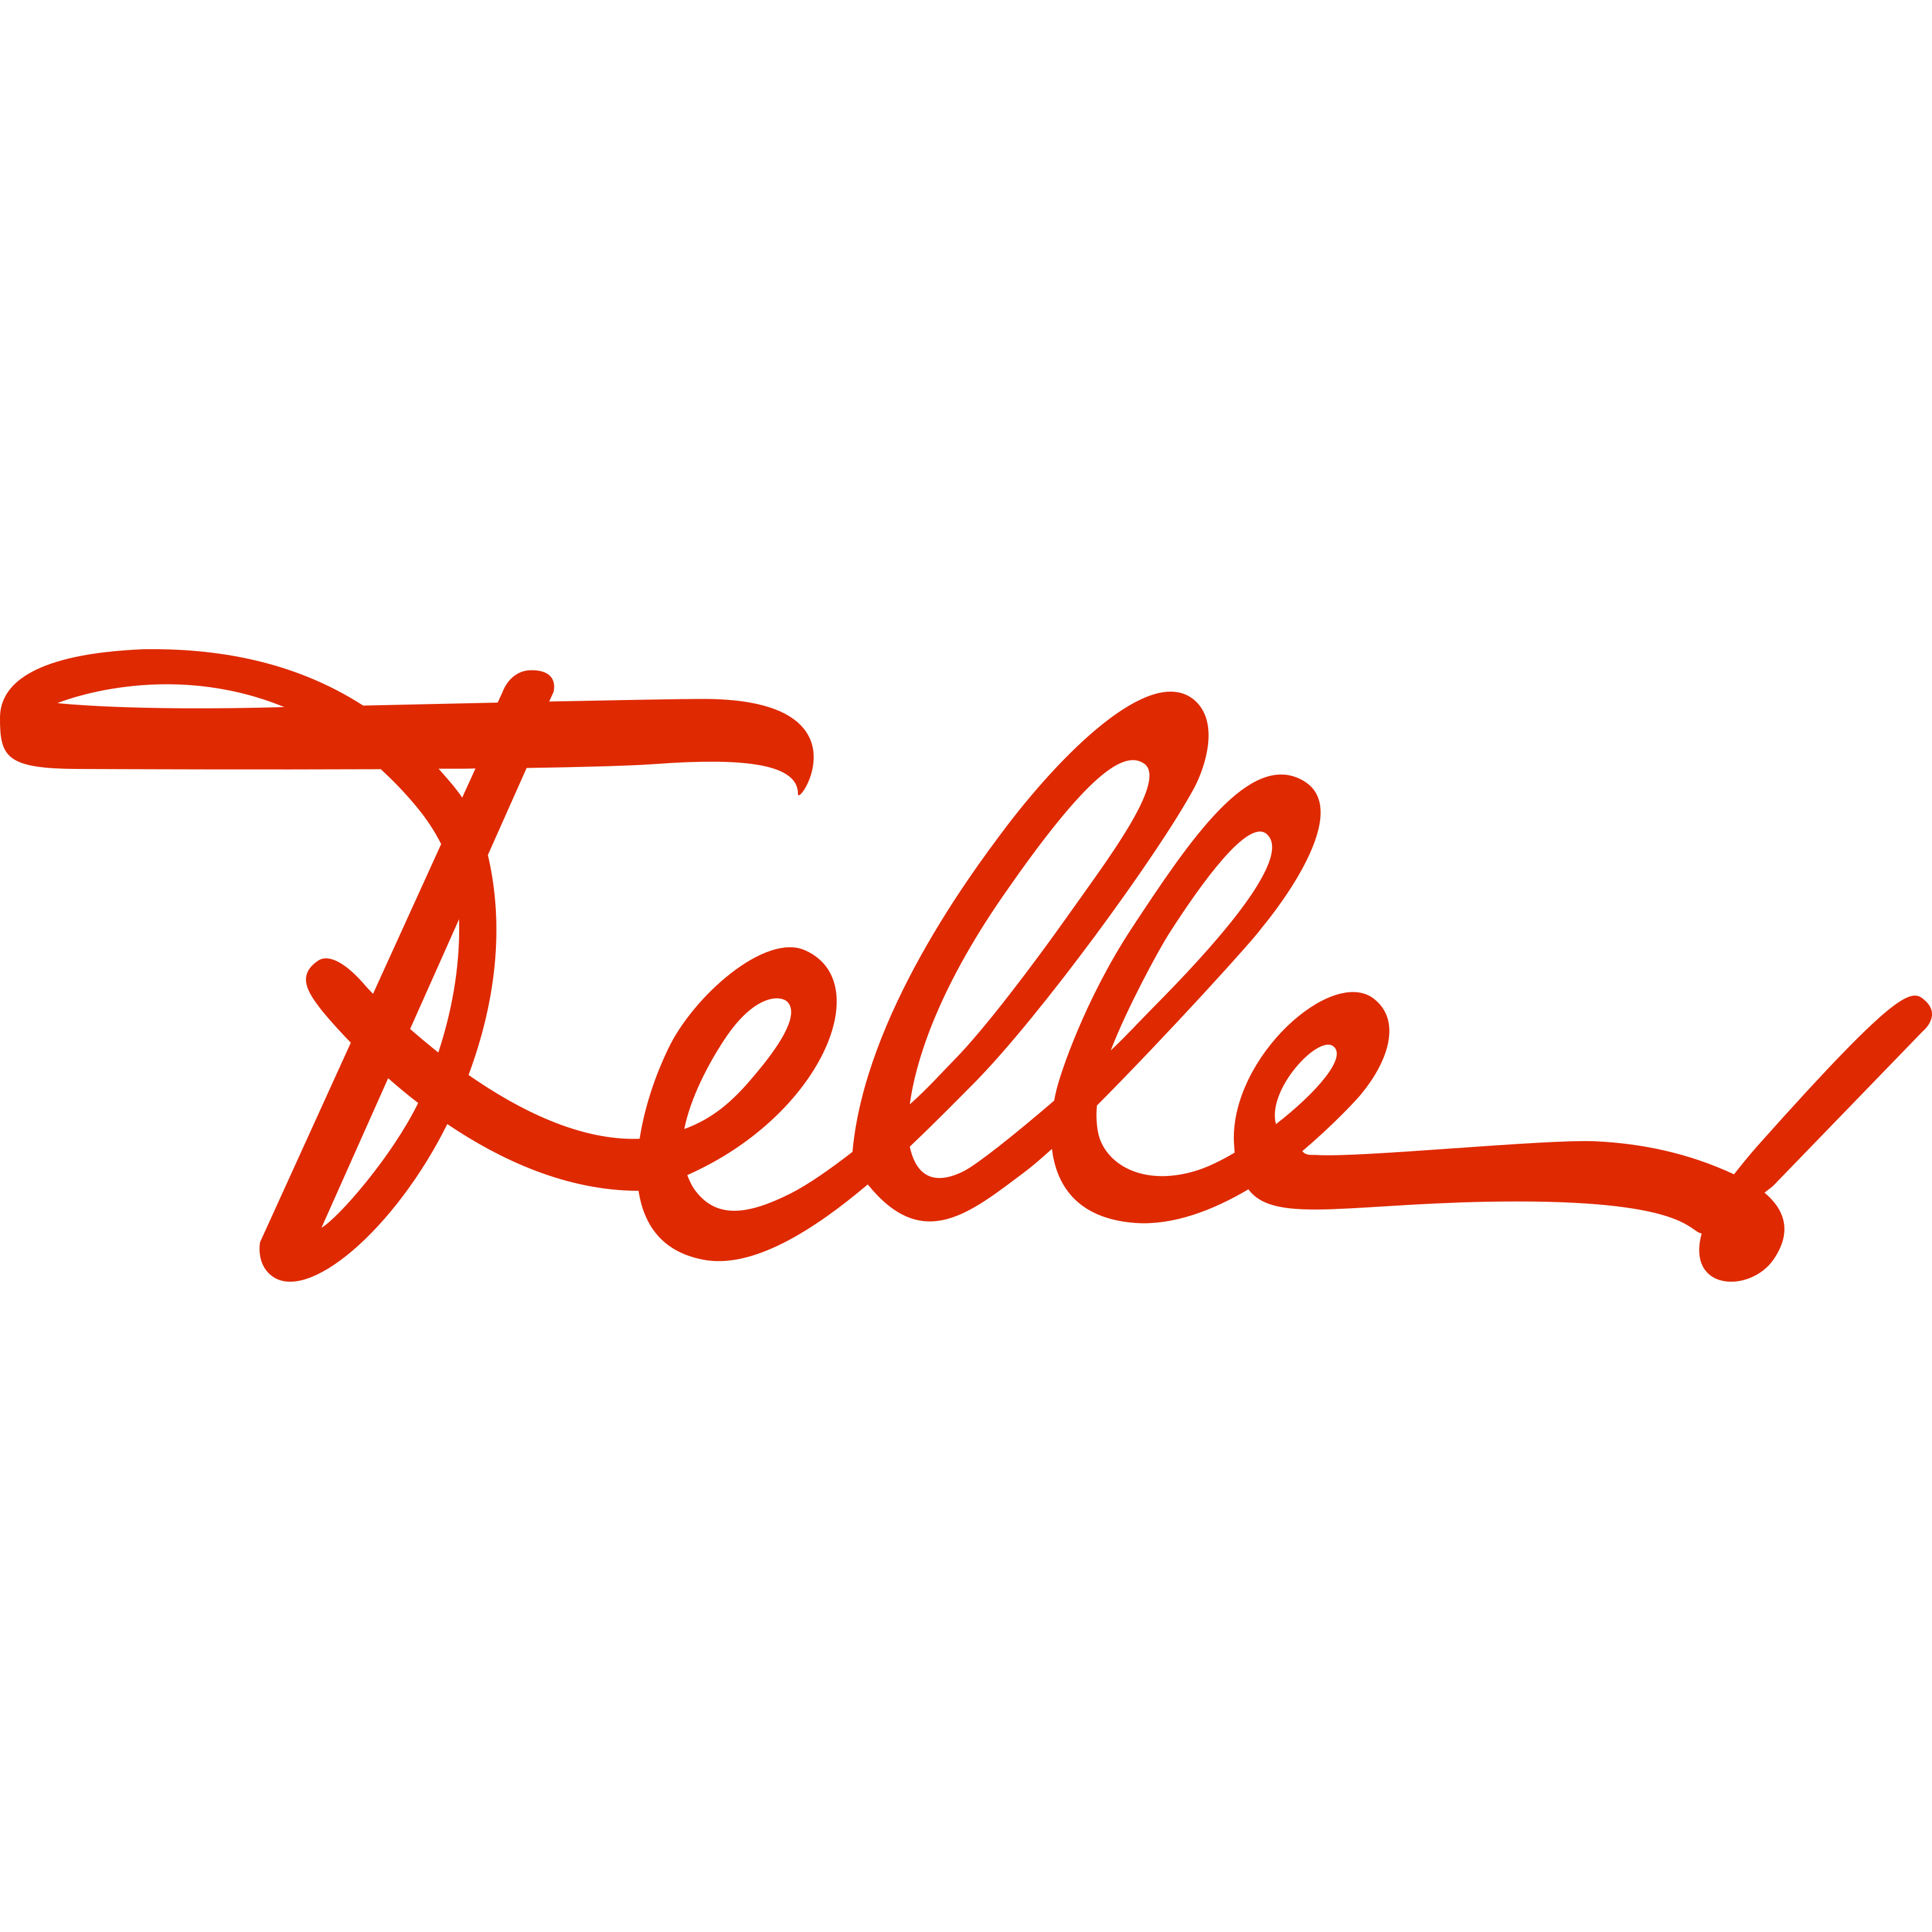 Feller Logo  Transparent Image